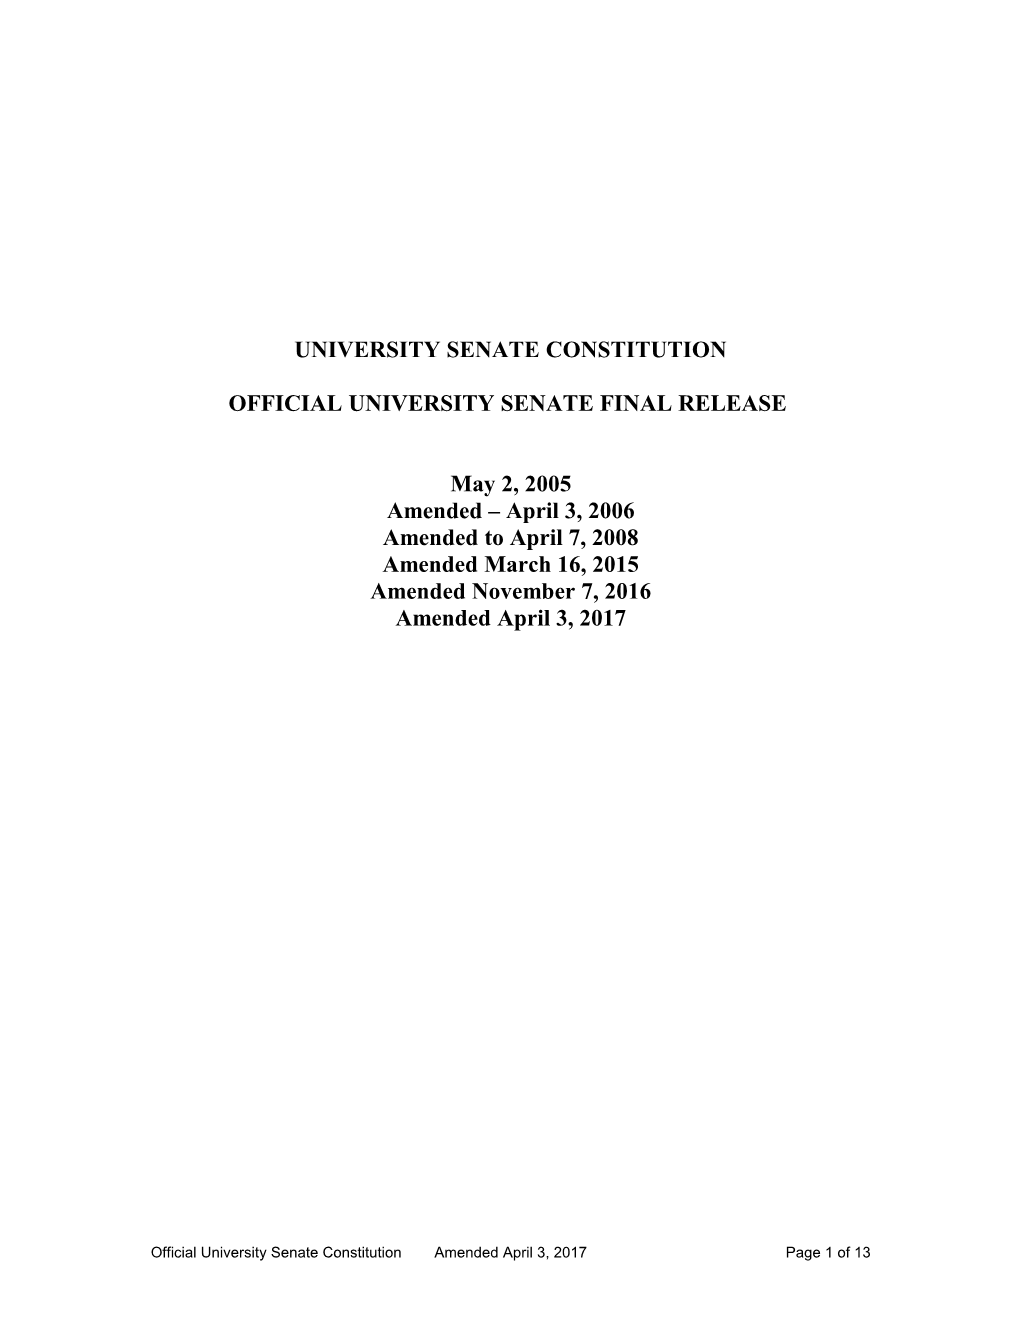 Unofficial University Senate Documents